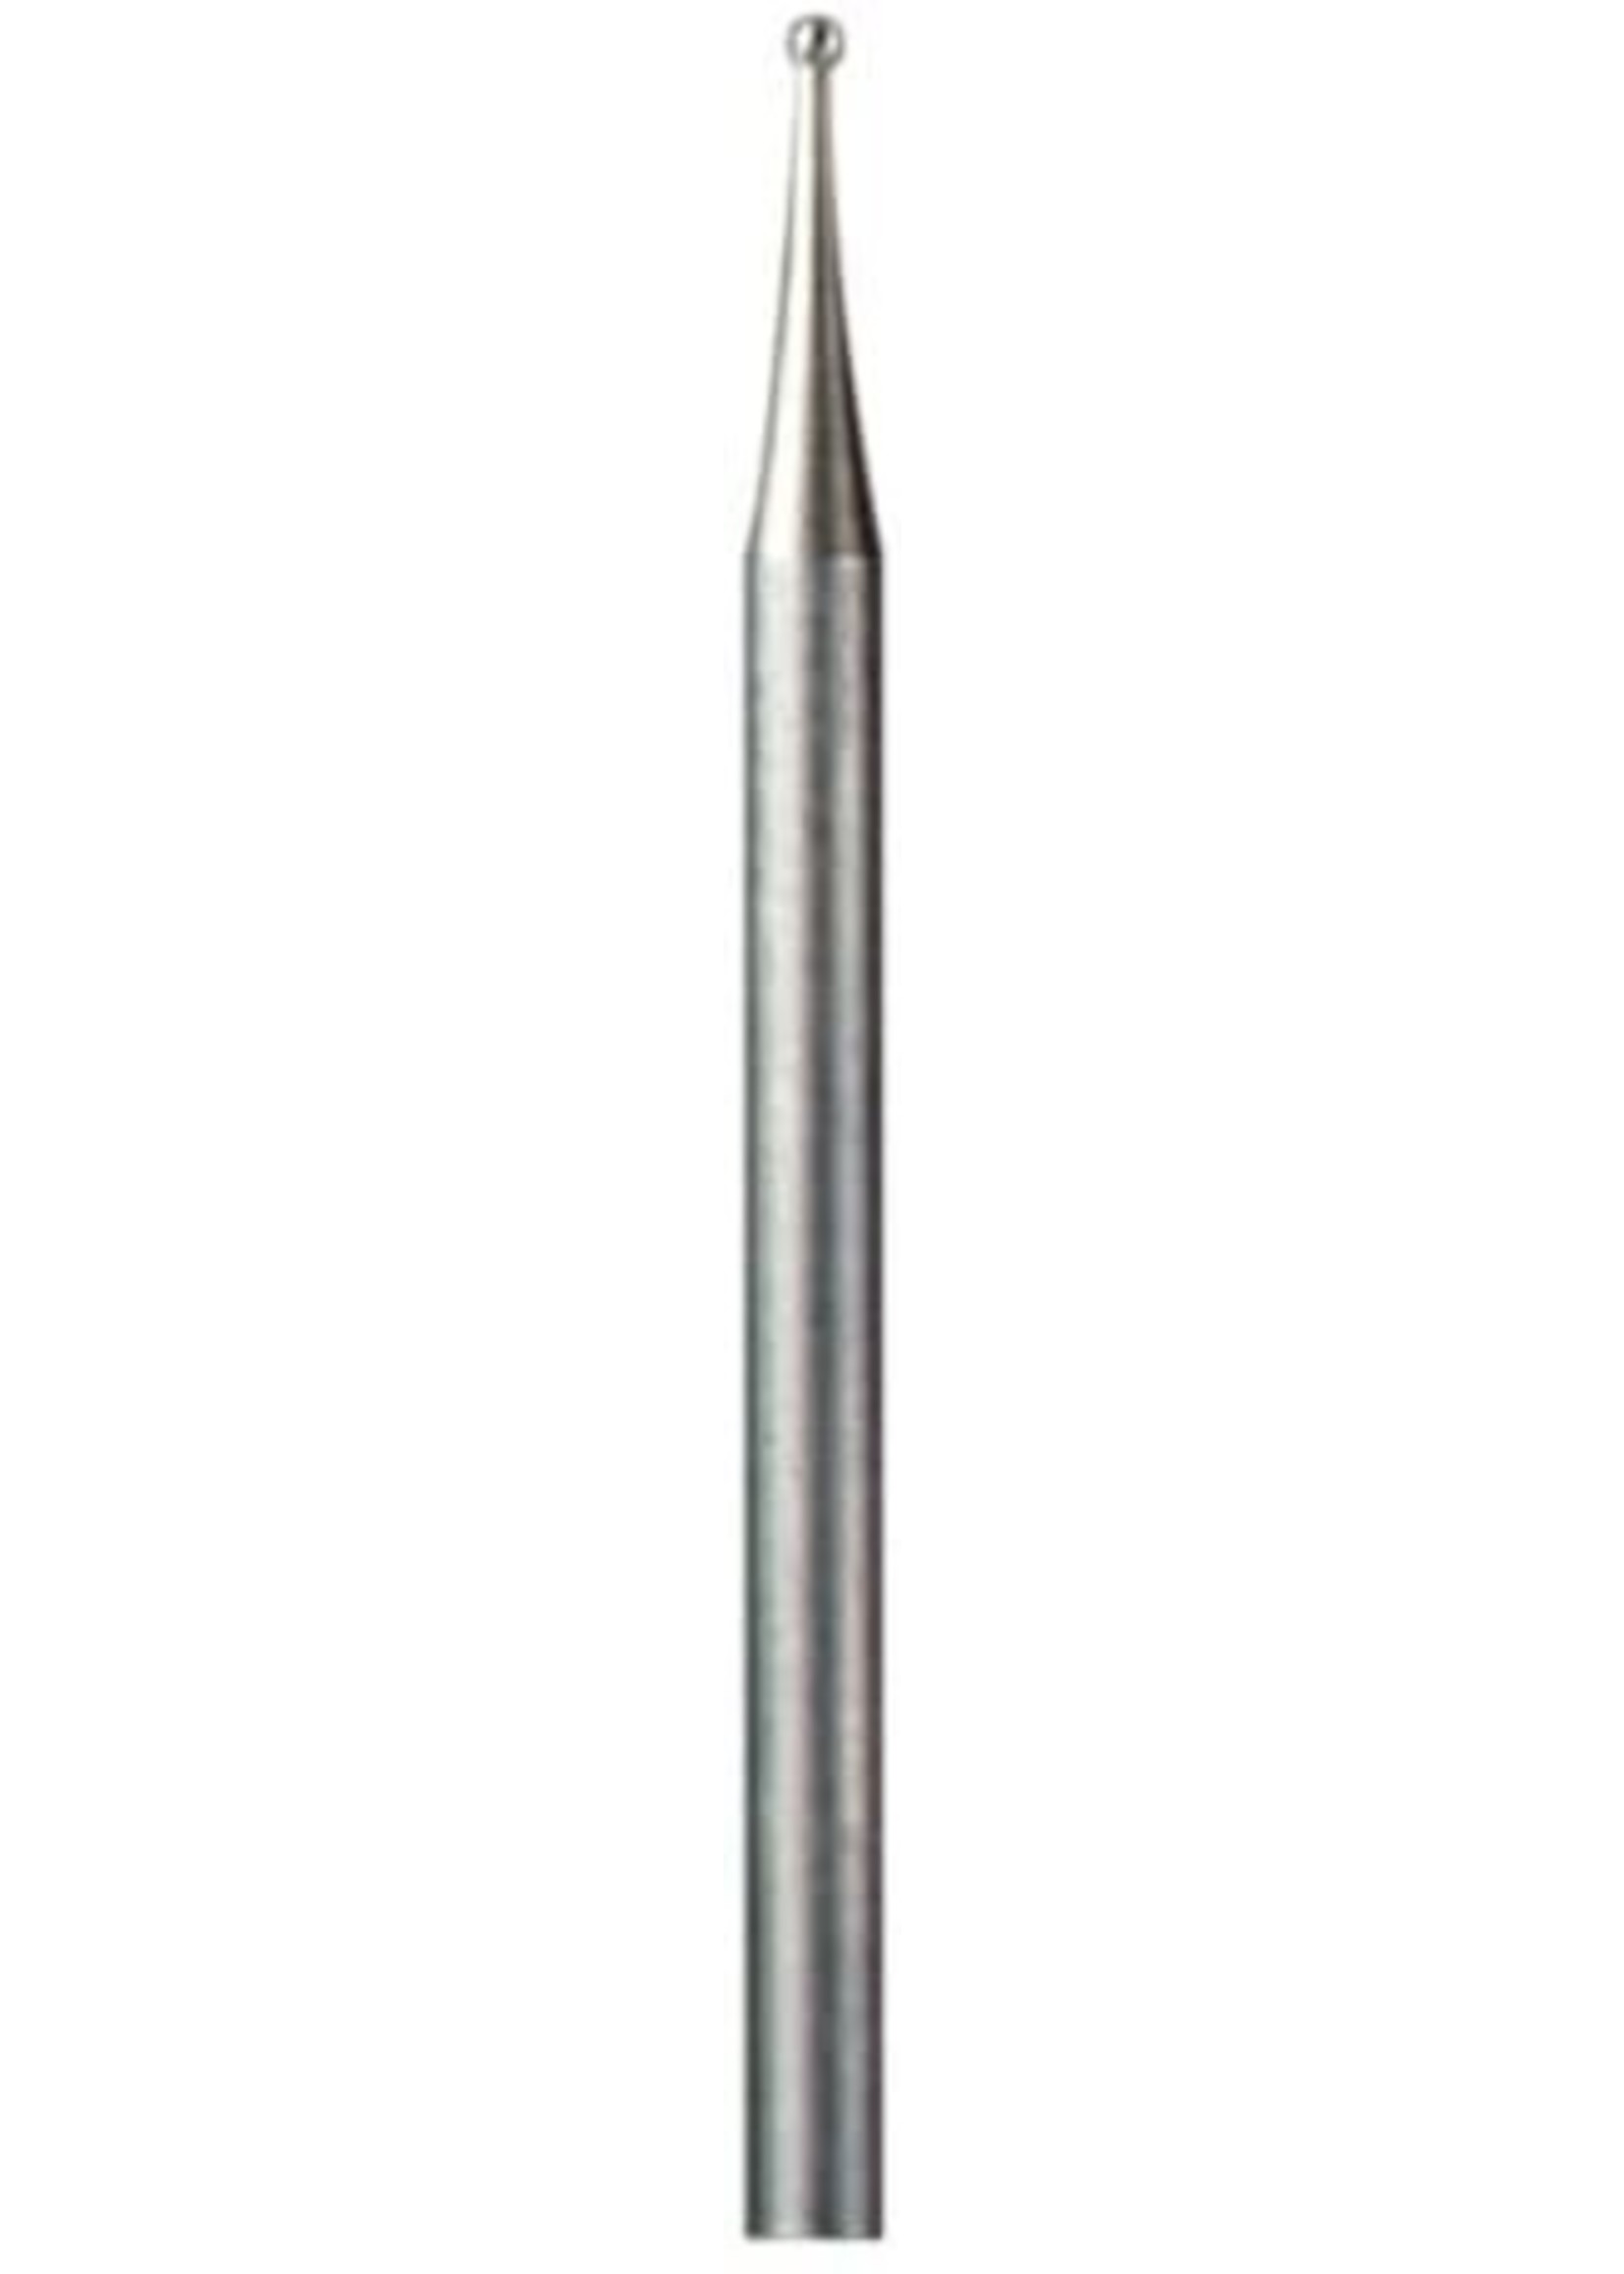 Dremel 108 1/32 inch Flat Engraving Cutter - Toolmarts.com